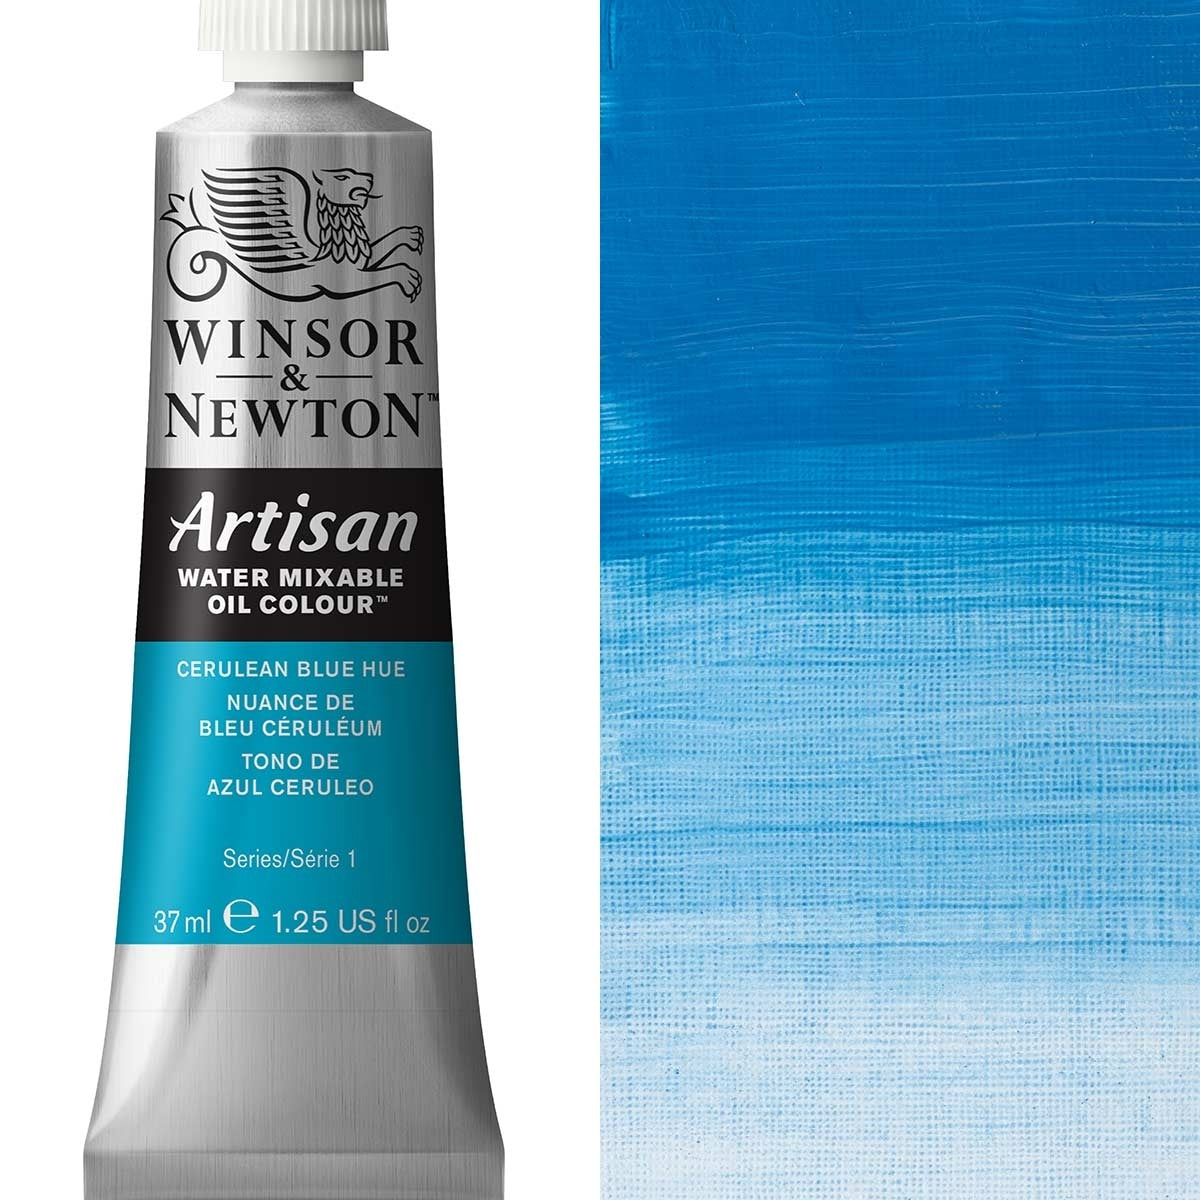 Winsor and Newton - Artisan Oil Colour Watermixable - 37ml - Cerulean Blue